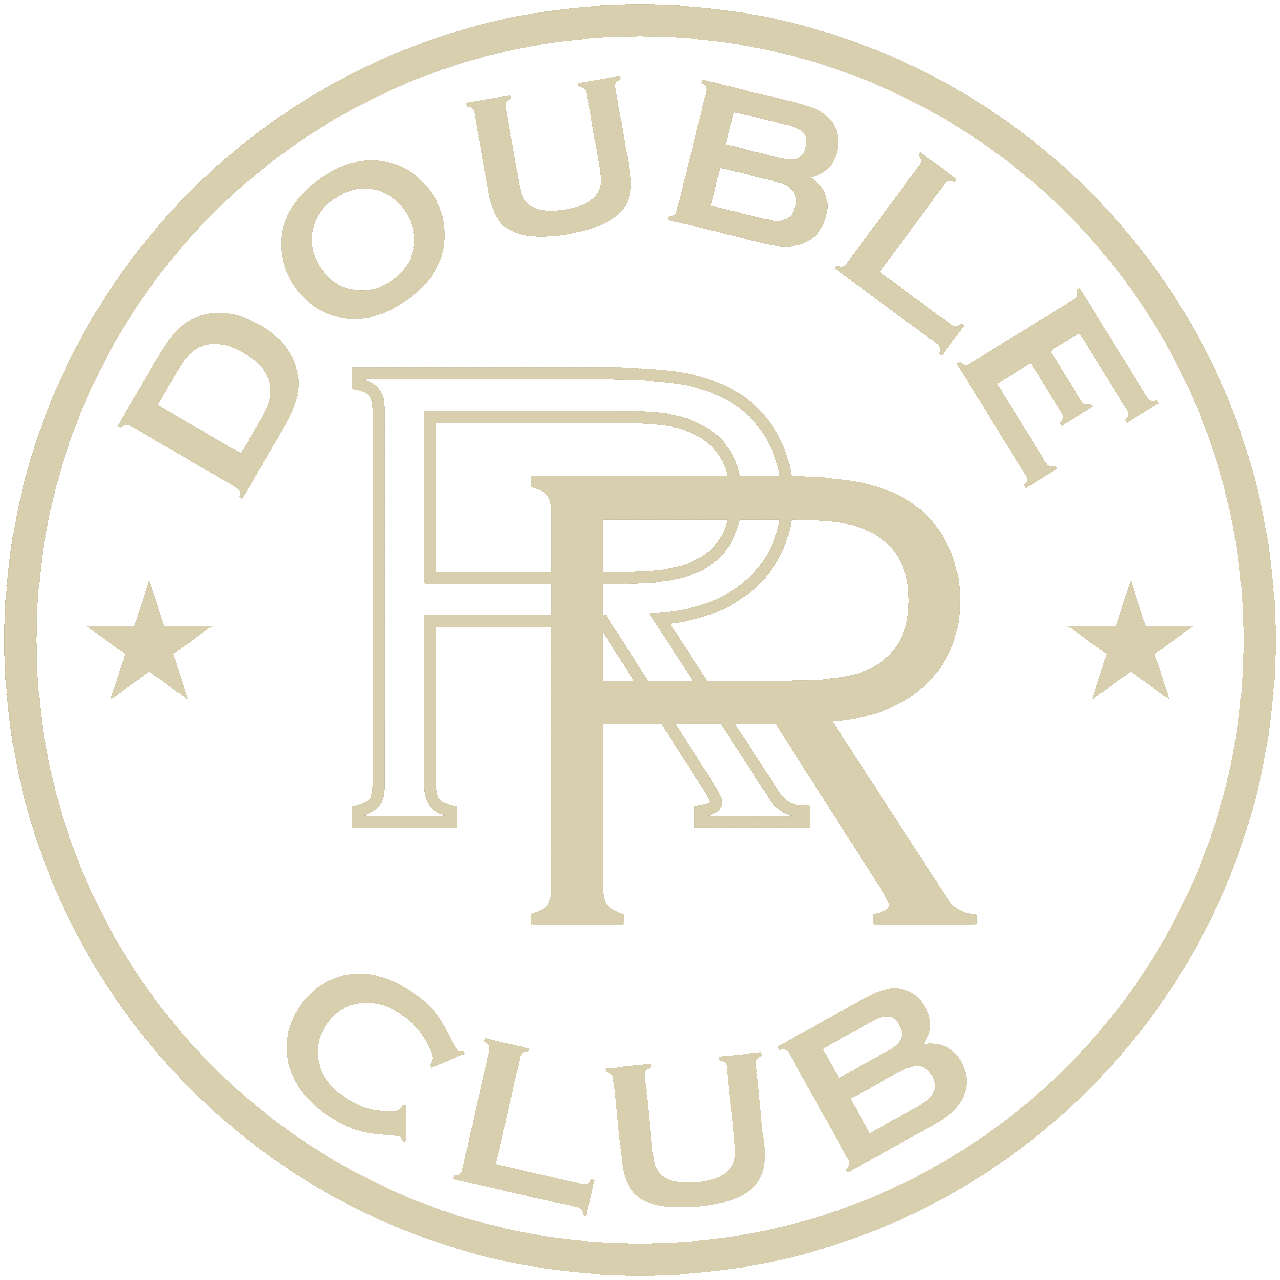 Double R Logo - DOUBLE R CLUB LOGO - Home